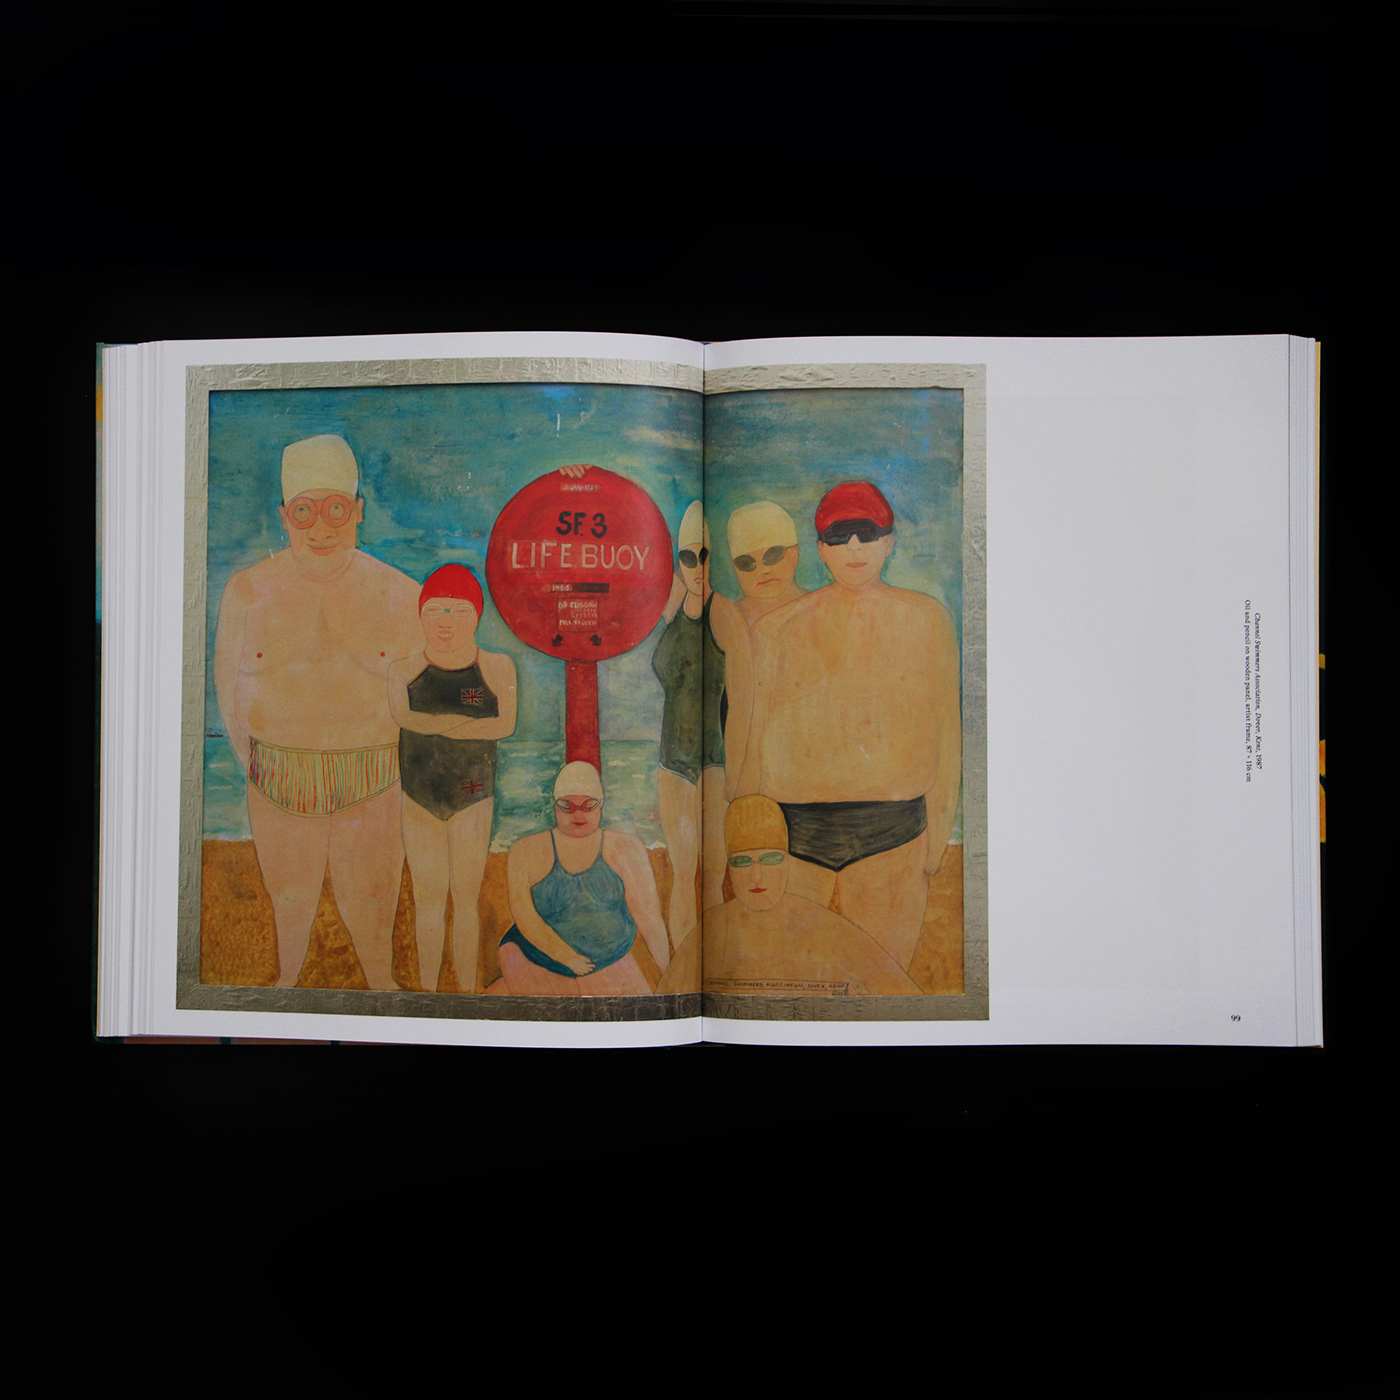 artbook book design Paintings coverdesign hardcover timvanlaere